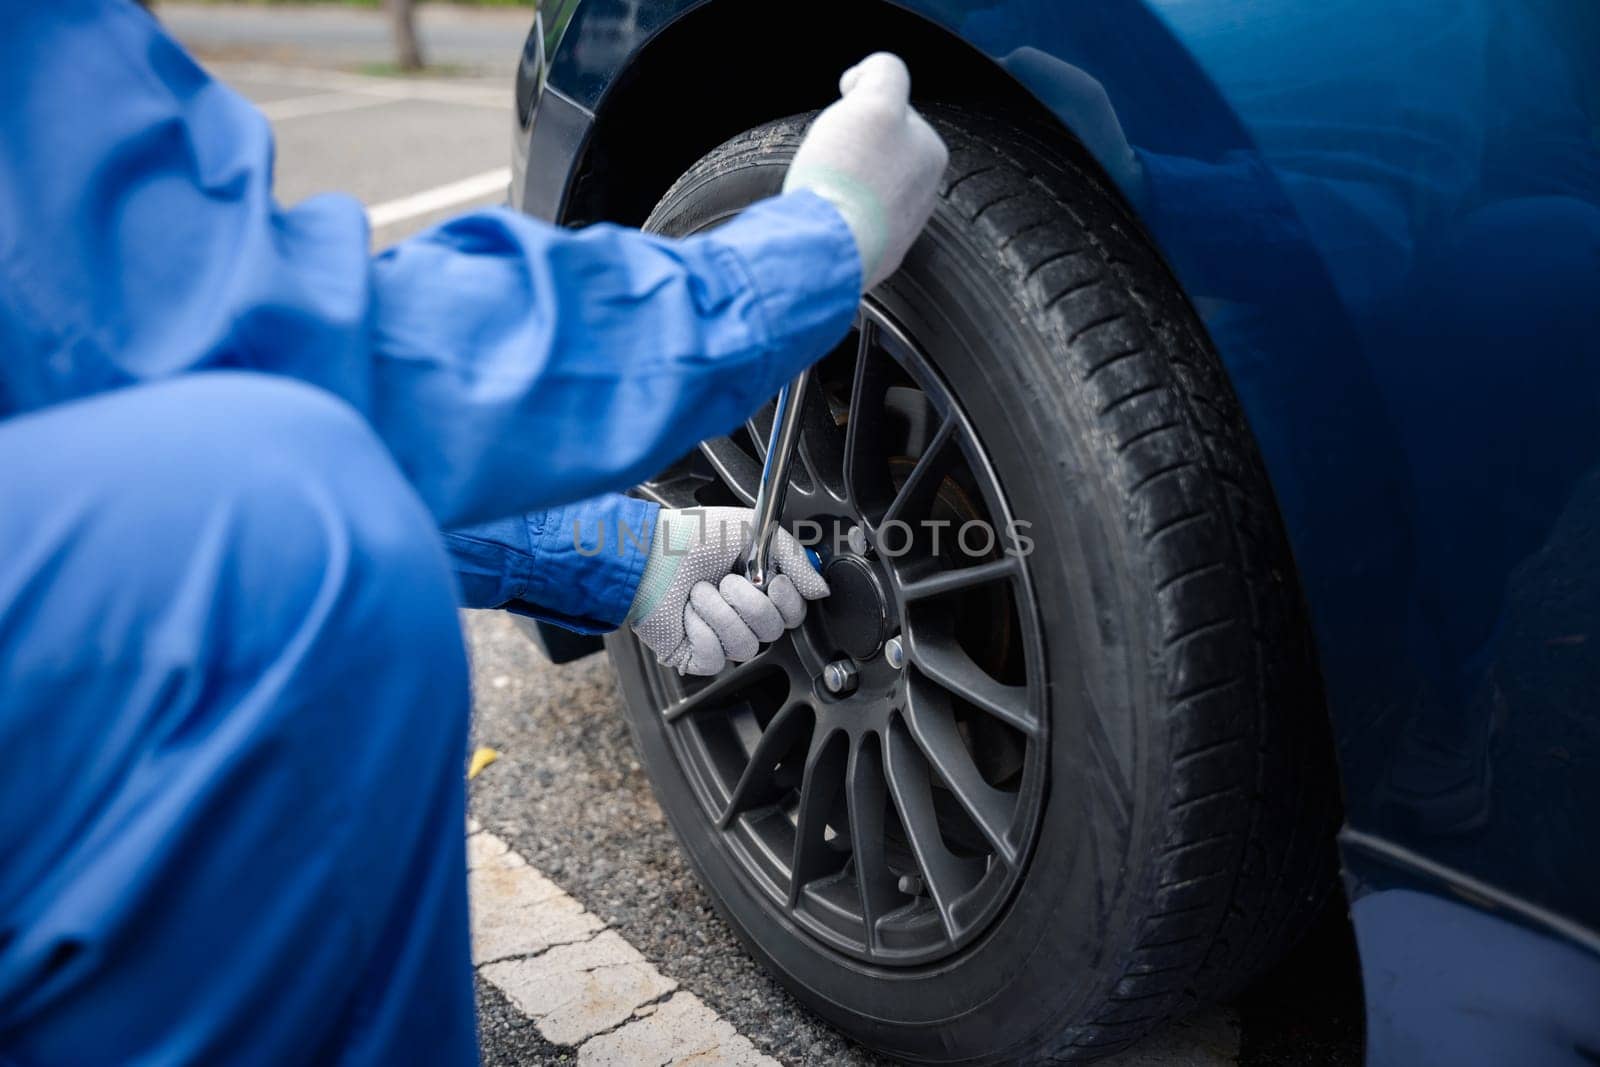 Mature man holding a car wheel, preparing to change it. Shot taken at an auto repair shop.